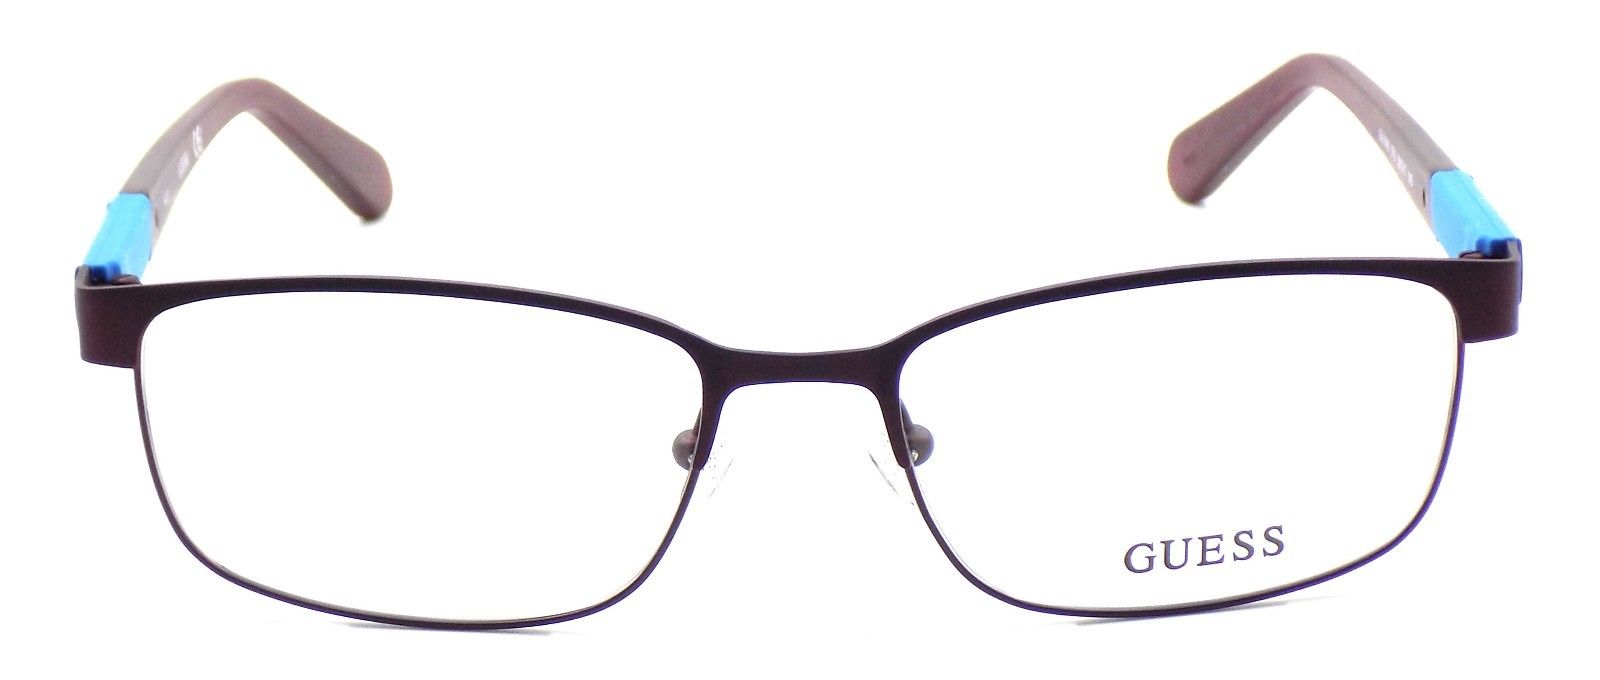 2-GUESS GU1865 070 Eyeglasses Frames 53-17-140 Matte Red + CASE-664689696147-IKSpecs